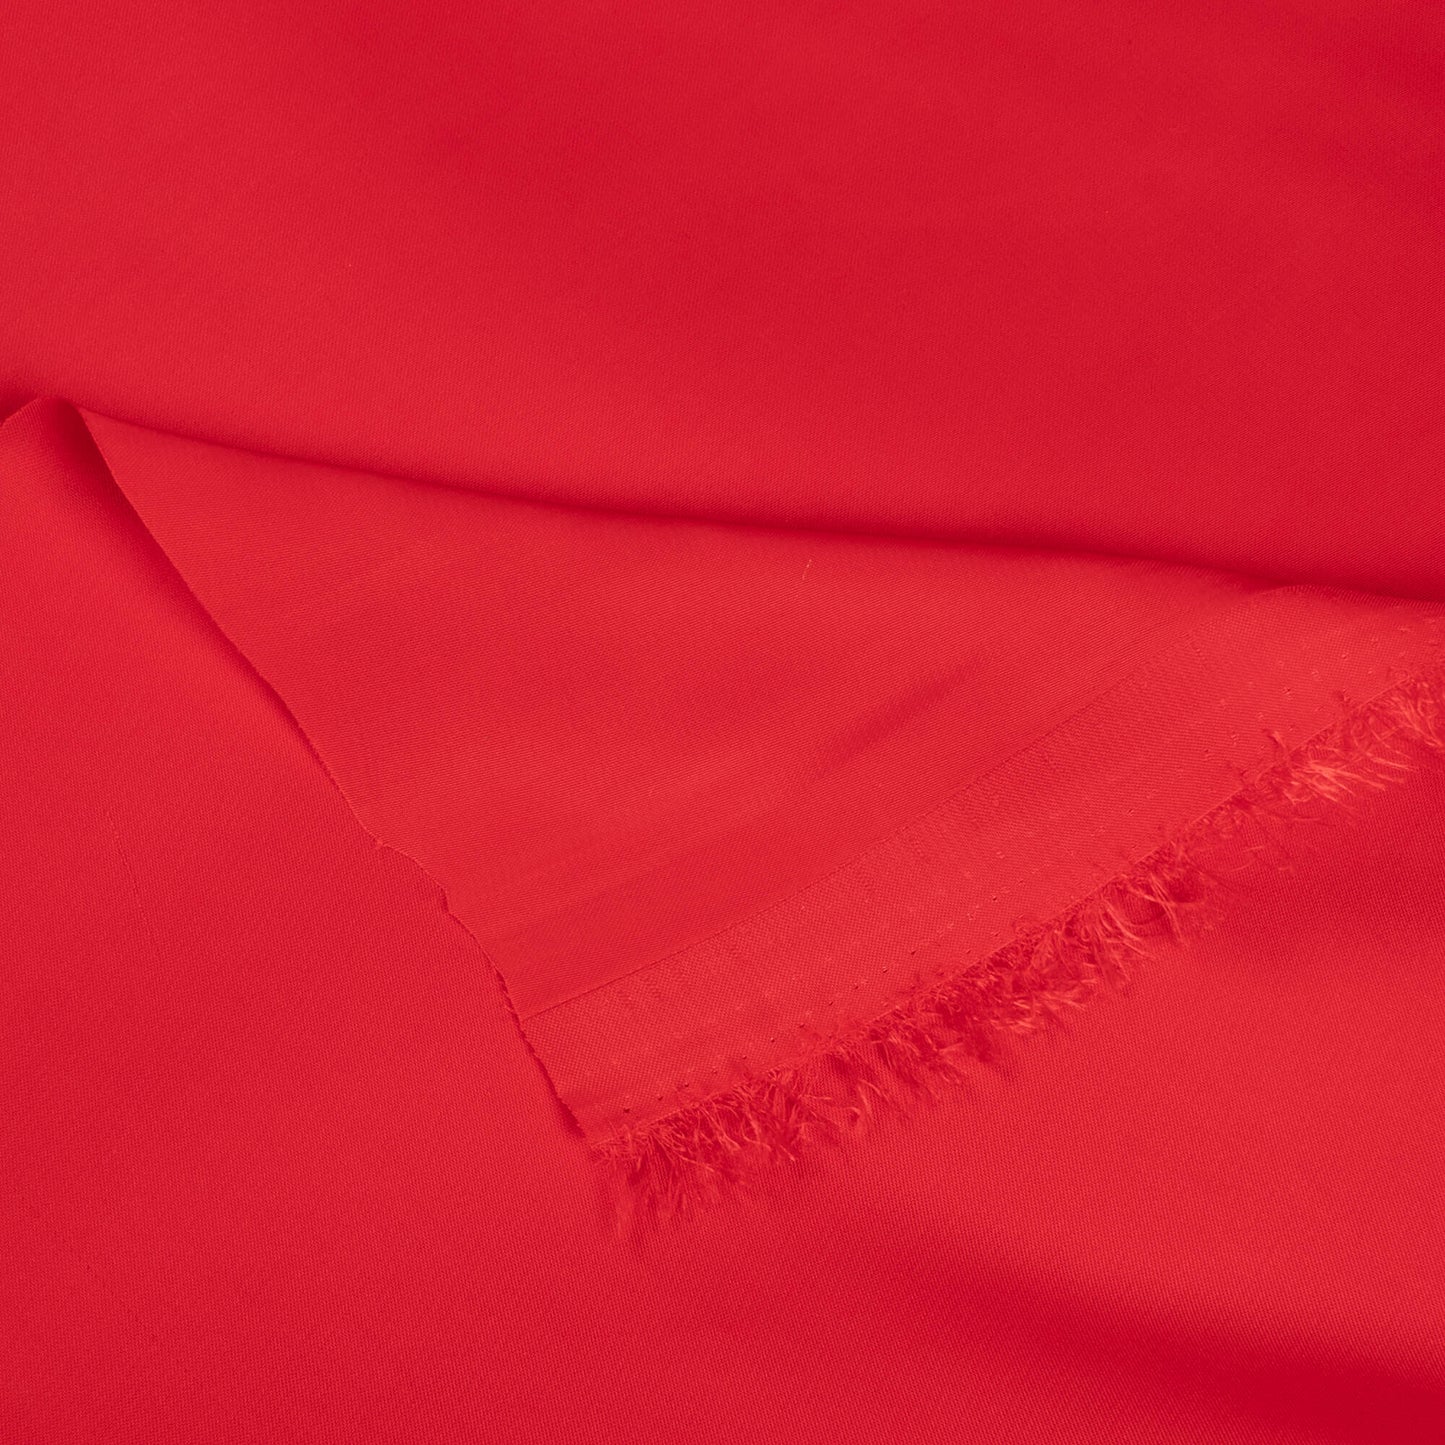 Vermilion Red Plain Imported Satin Fabric